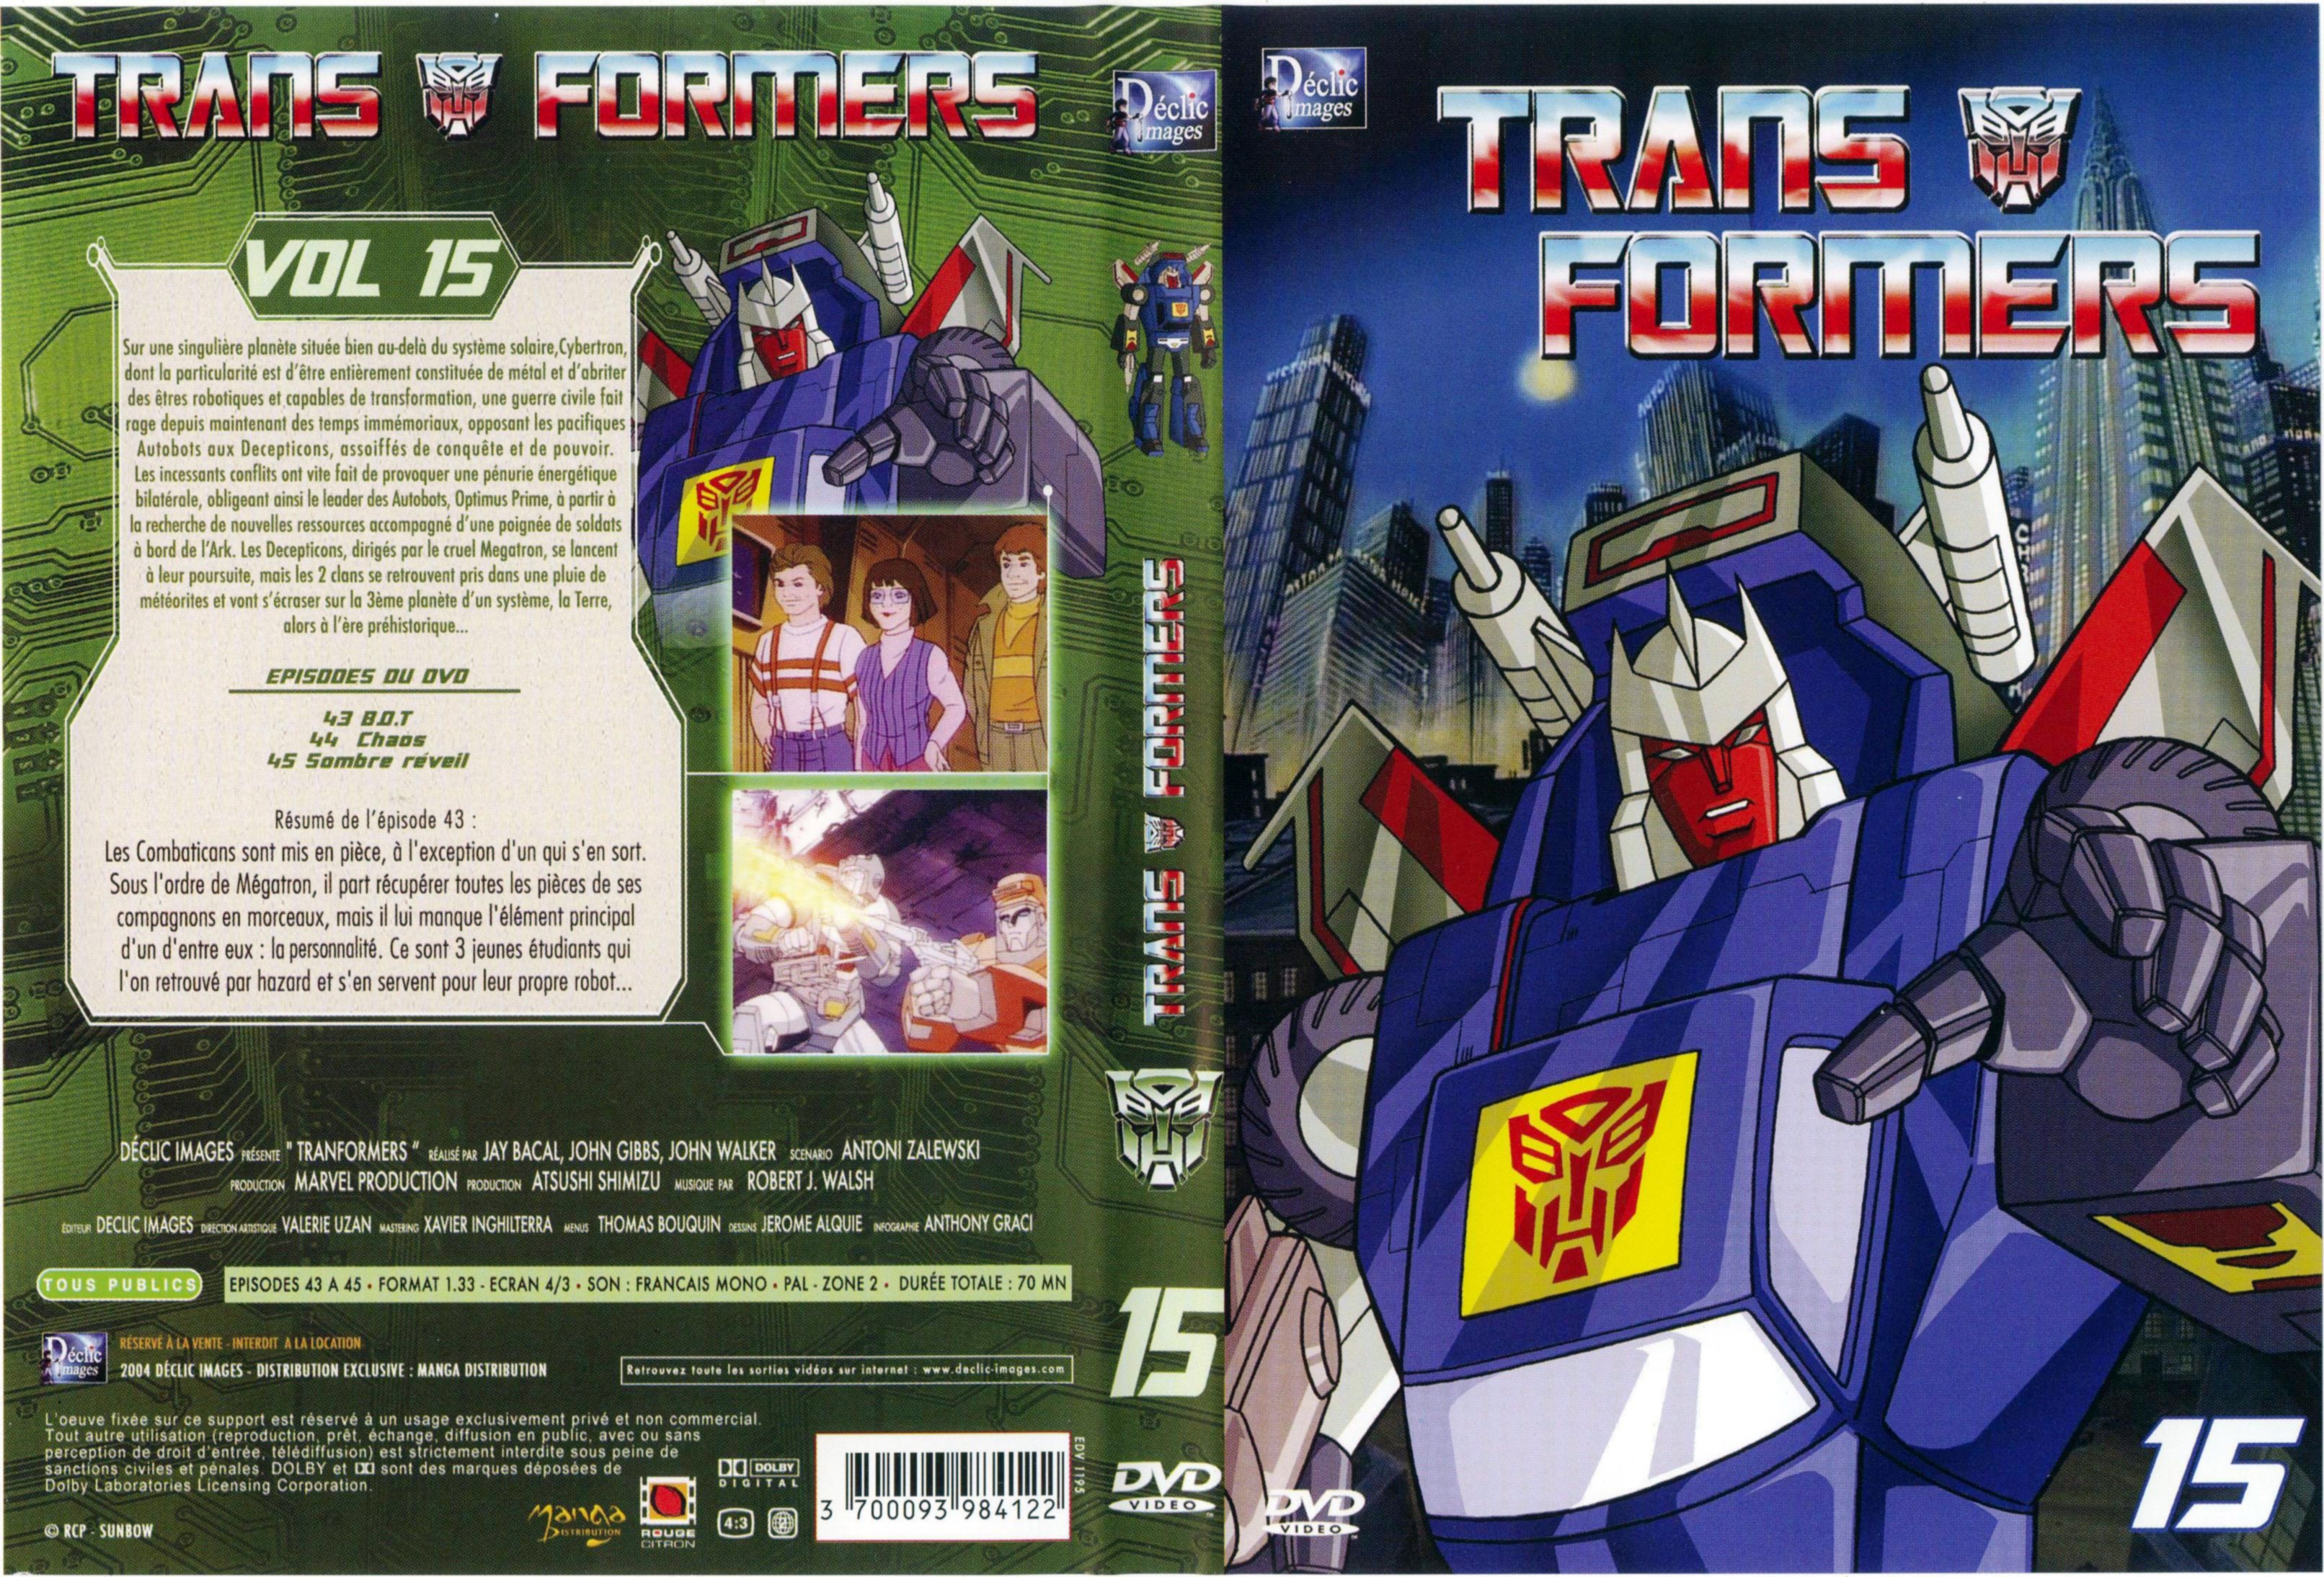 Jaquette DVD Transformers vol 15